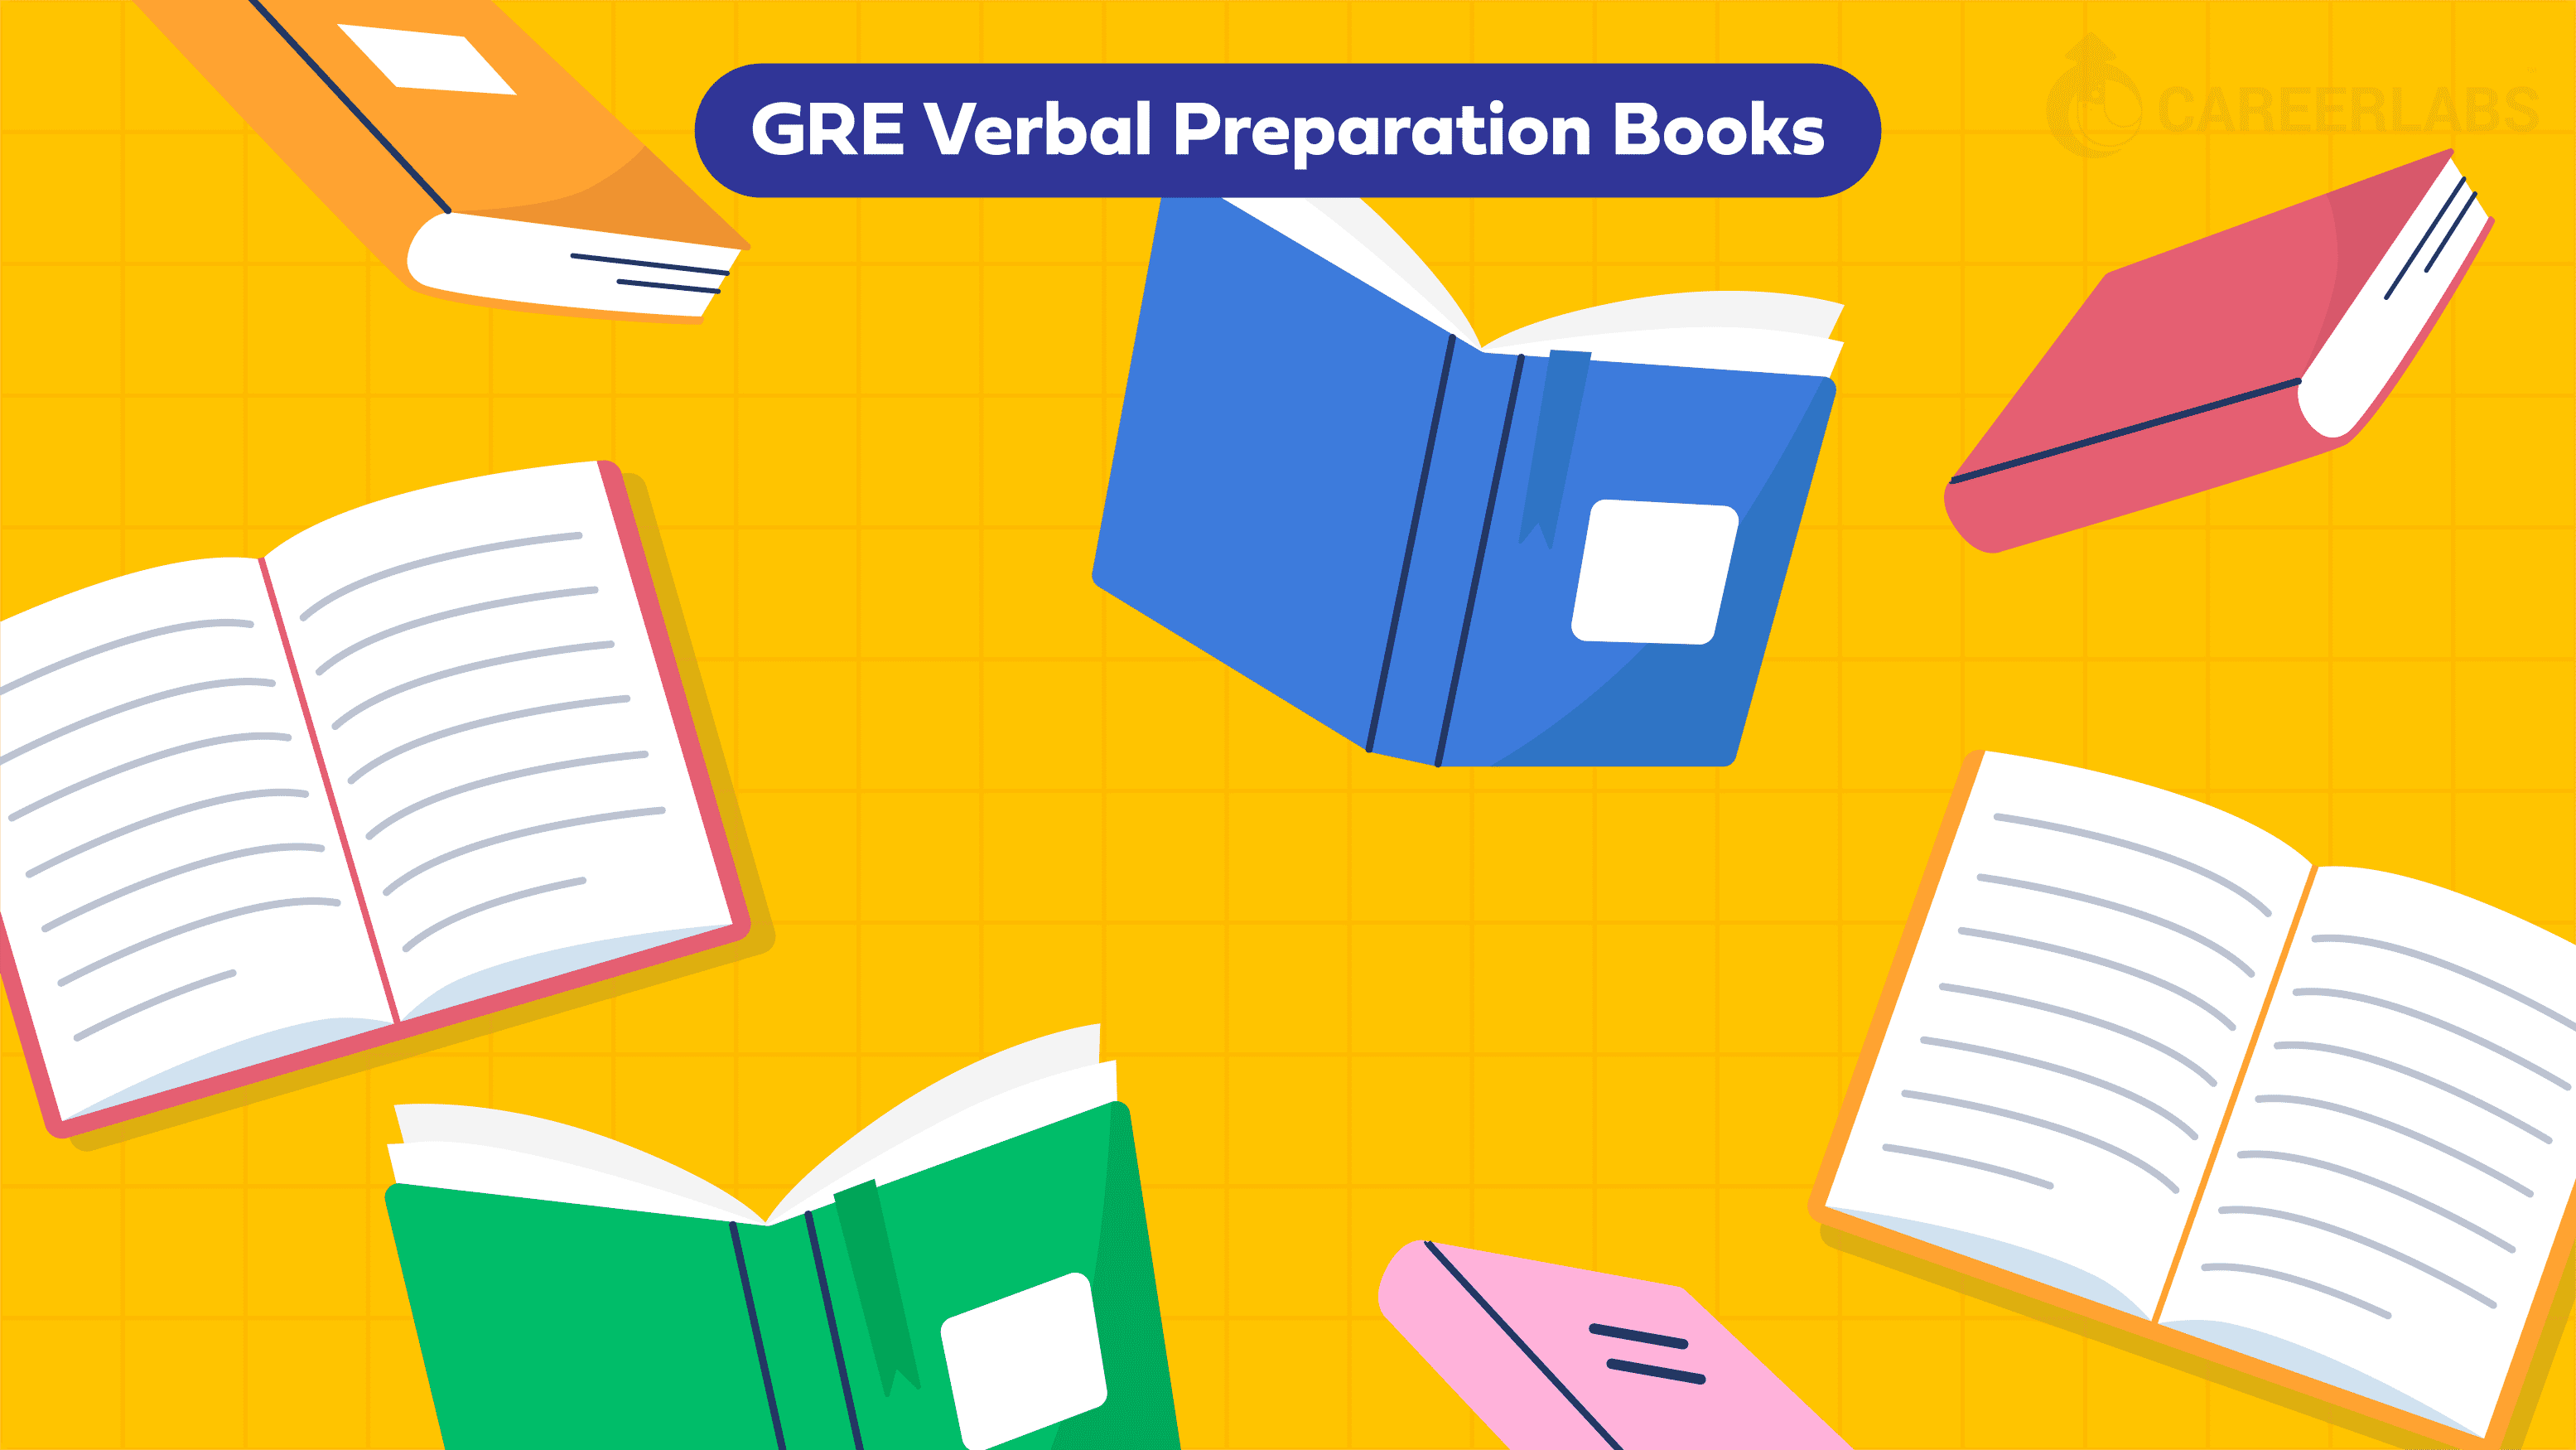 GRE Verbal Preparation Books